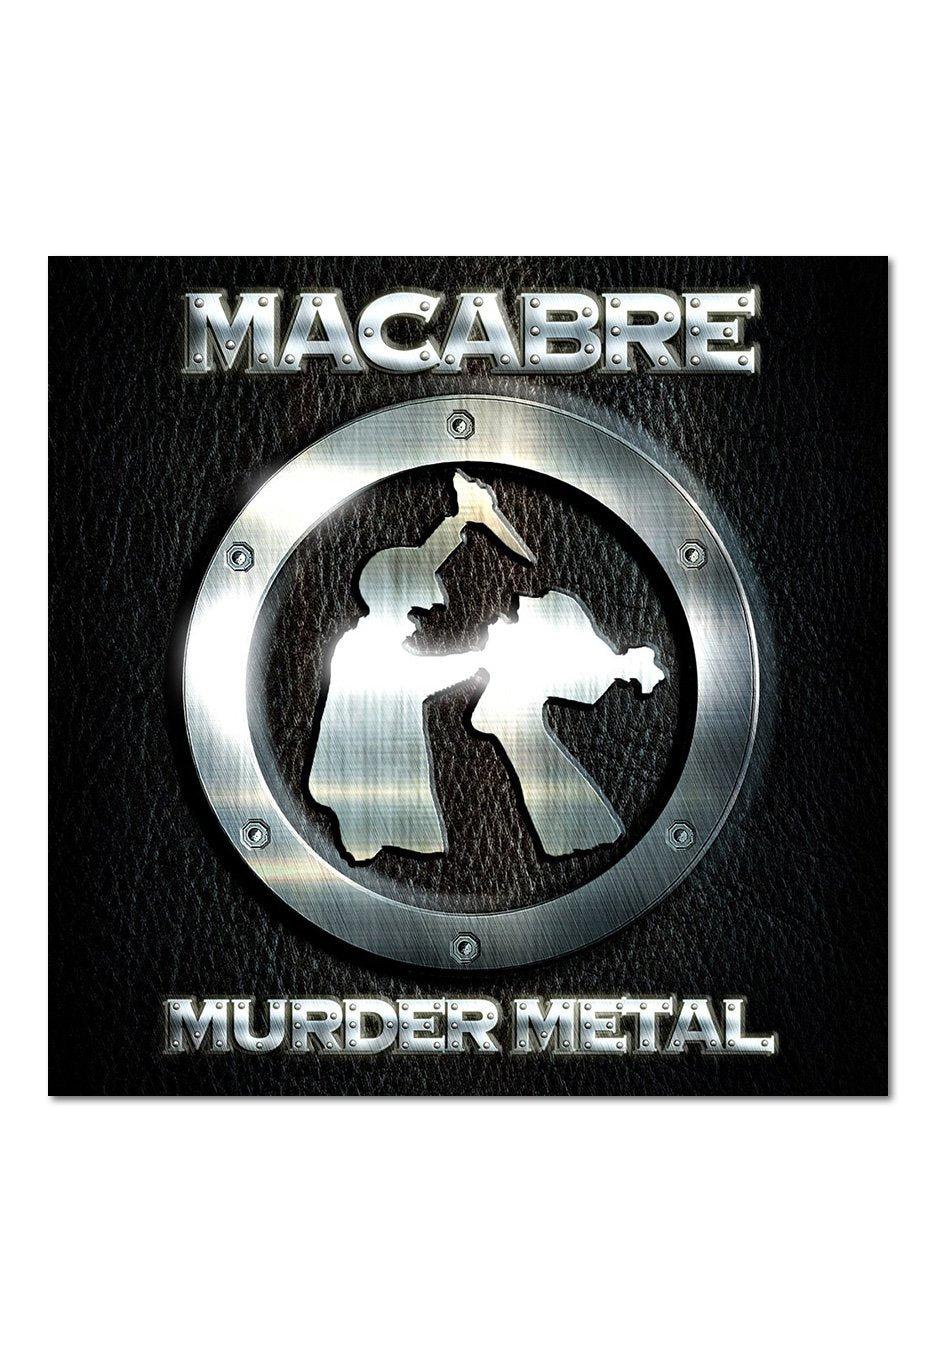 Macabre - Murder Metal (Remastered) - CD